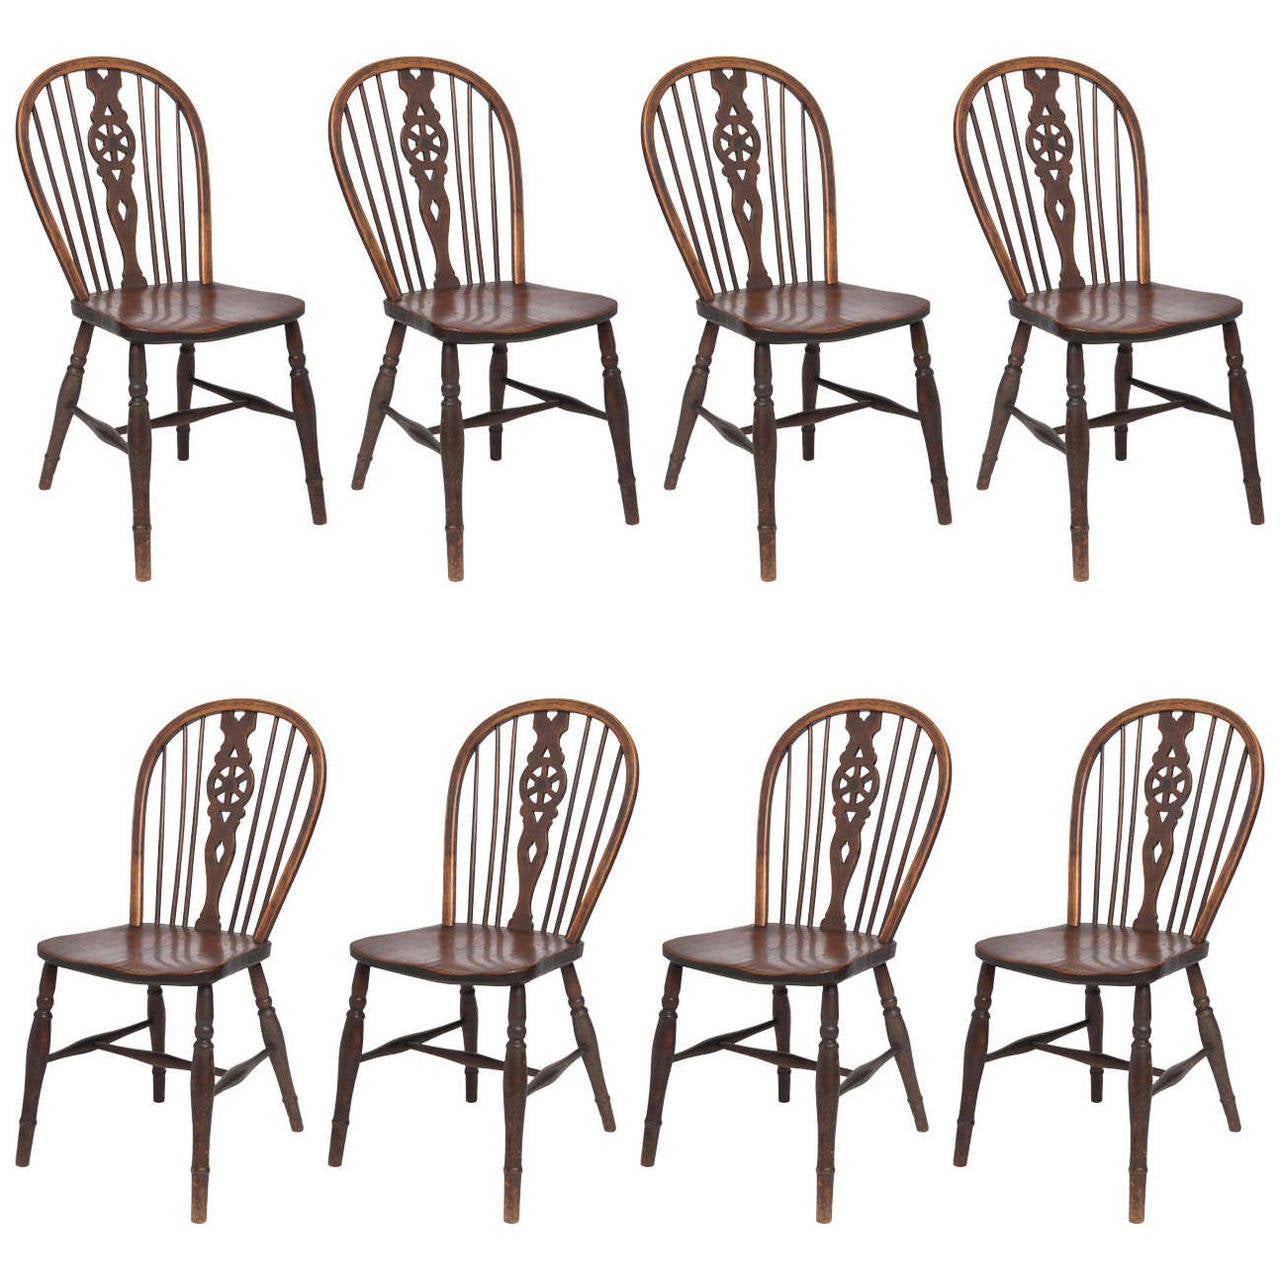 Eight Wheelback Windsor Chairs For Sale